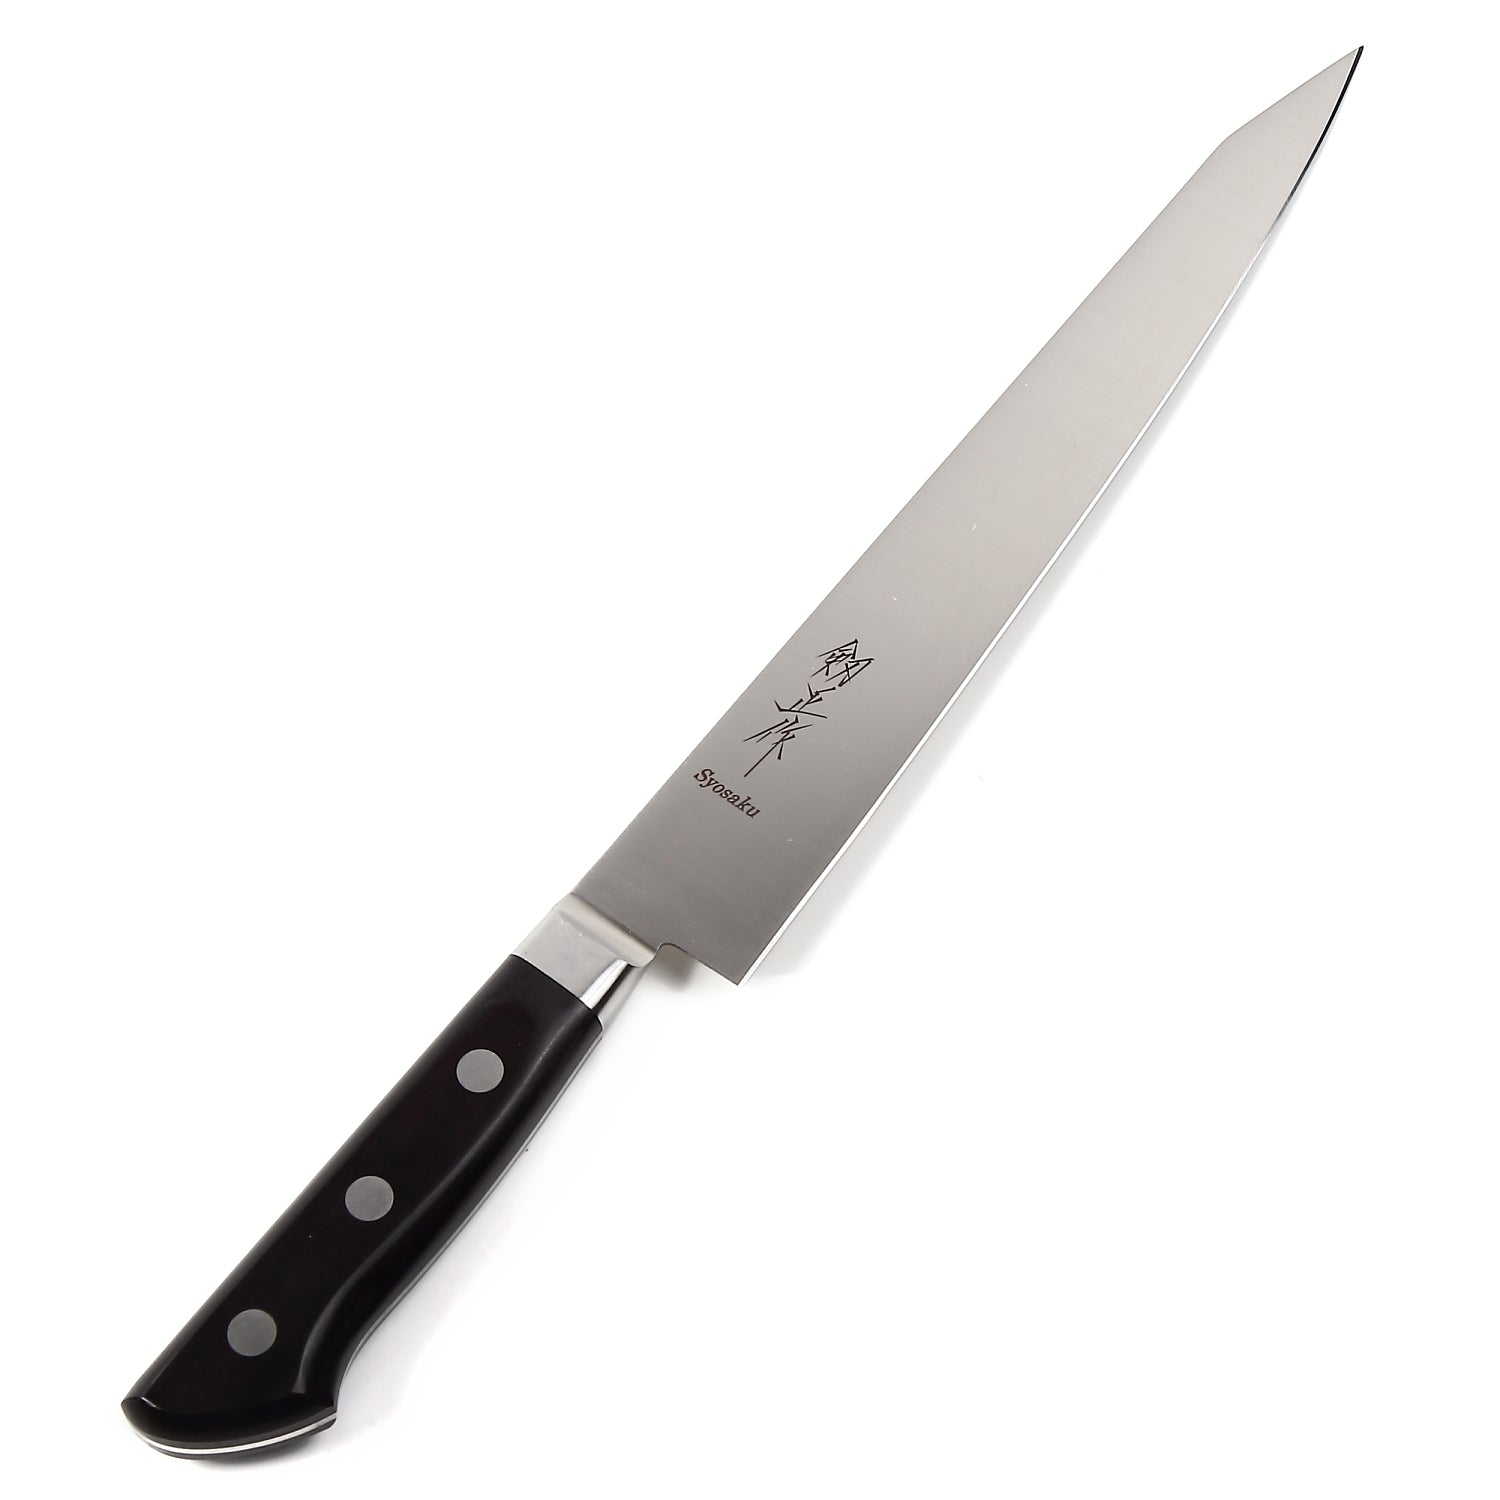 Syosaku Japanese Sujihiki Knife INOX AUS-8A Stainless Steel Black Pakkawood Handle, Slicer 9.5-inch (240mm)